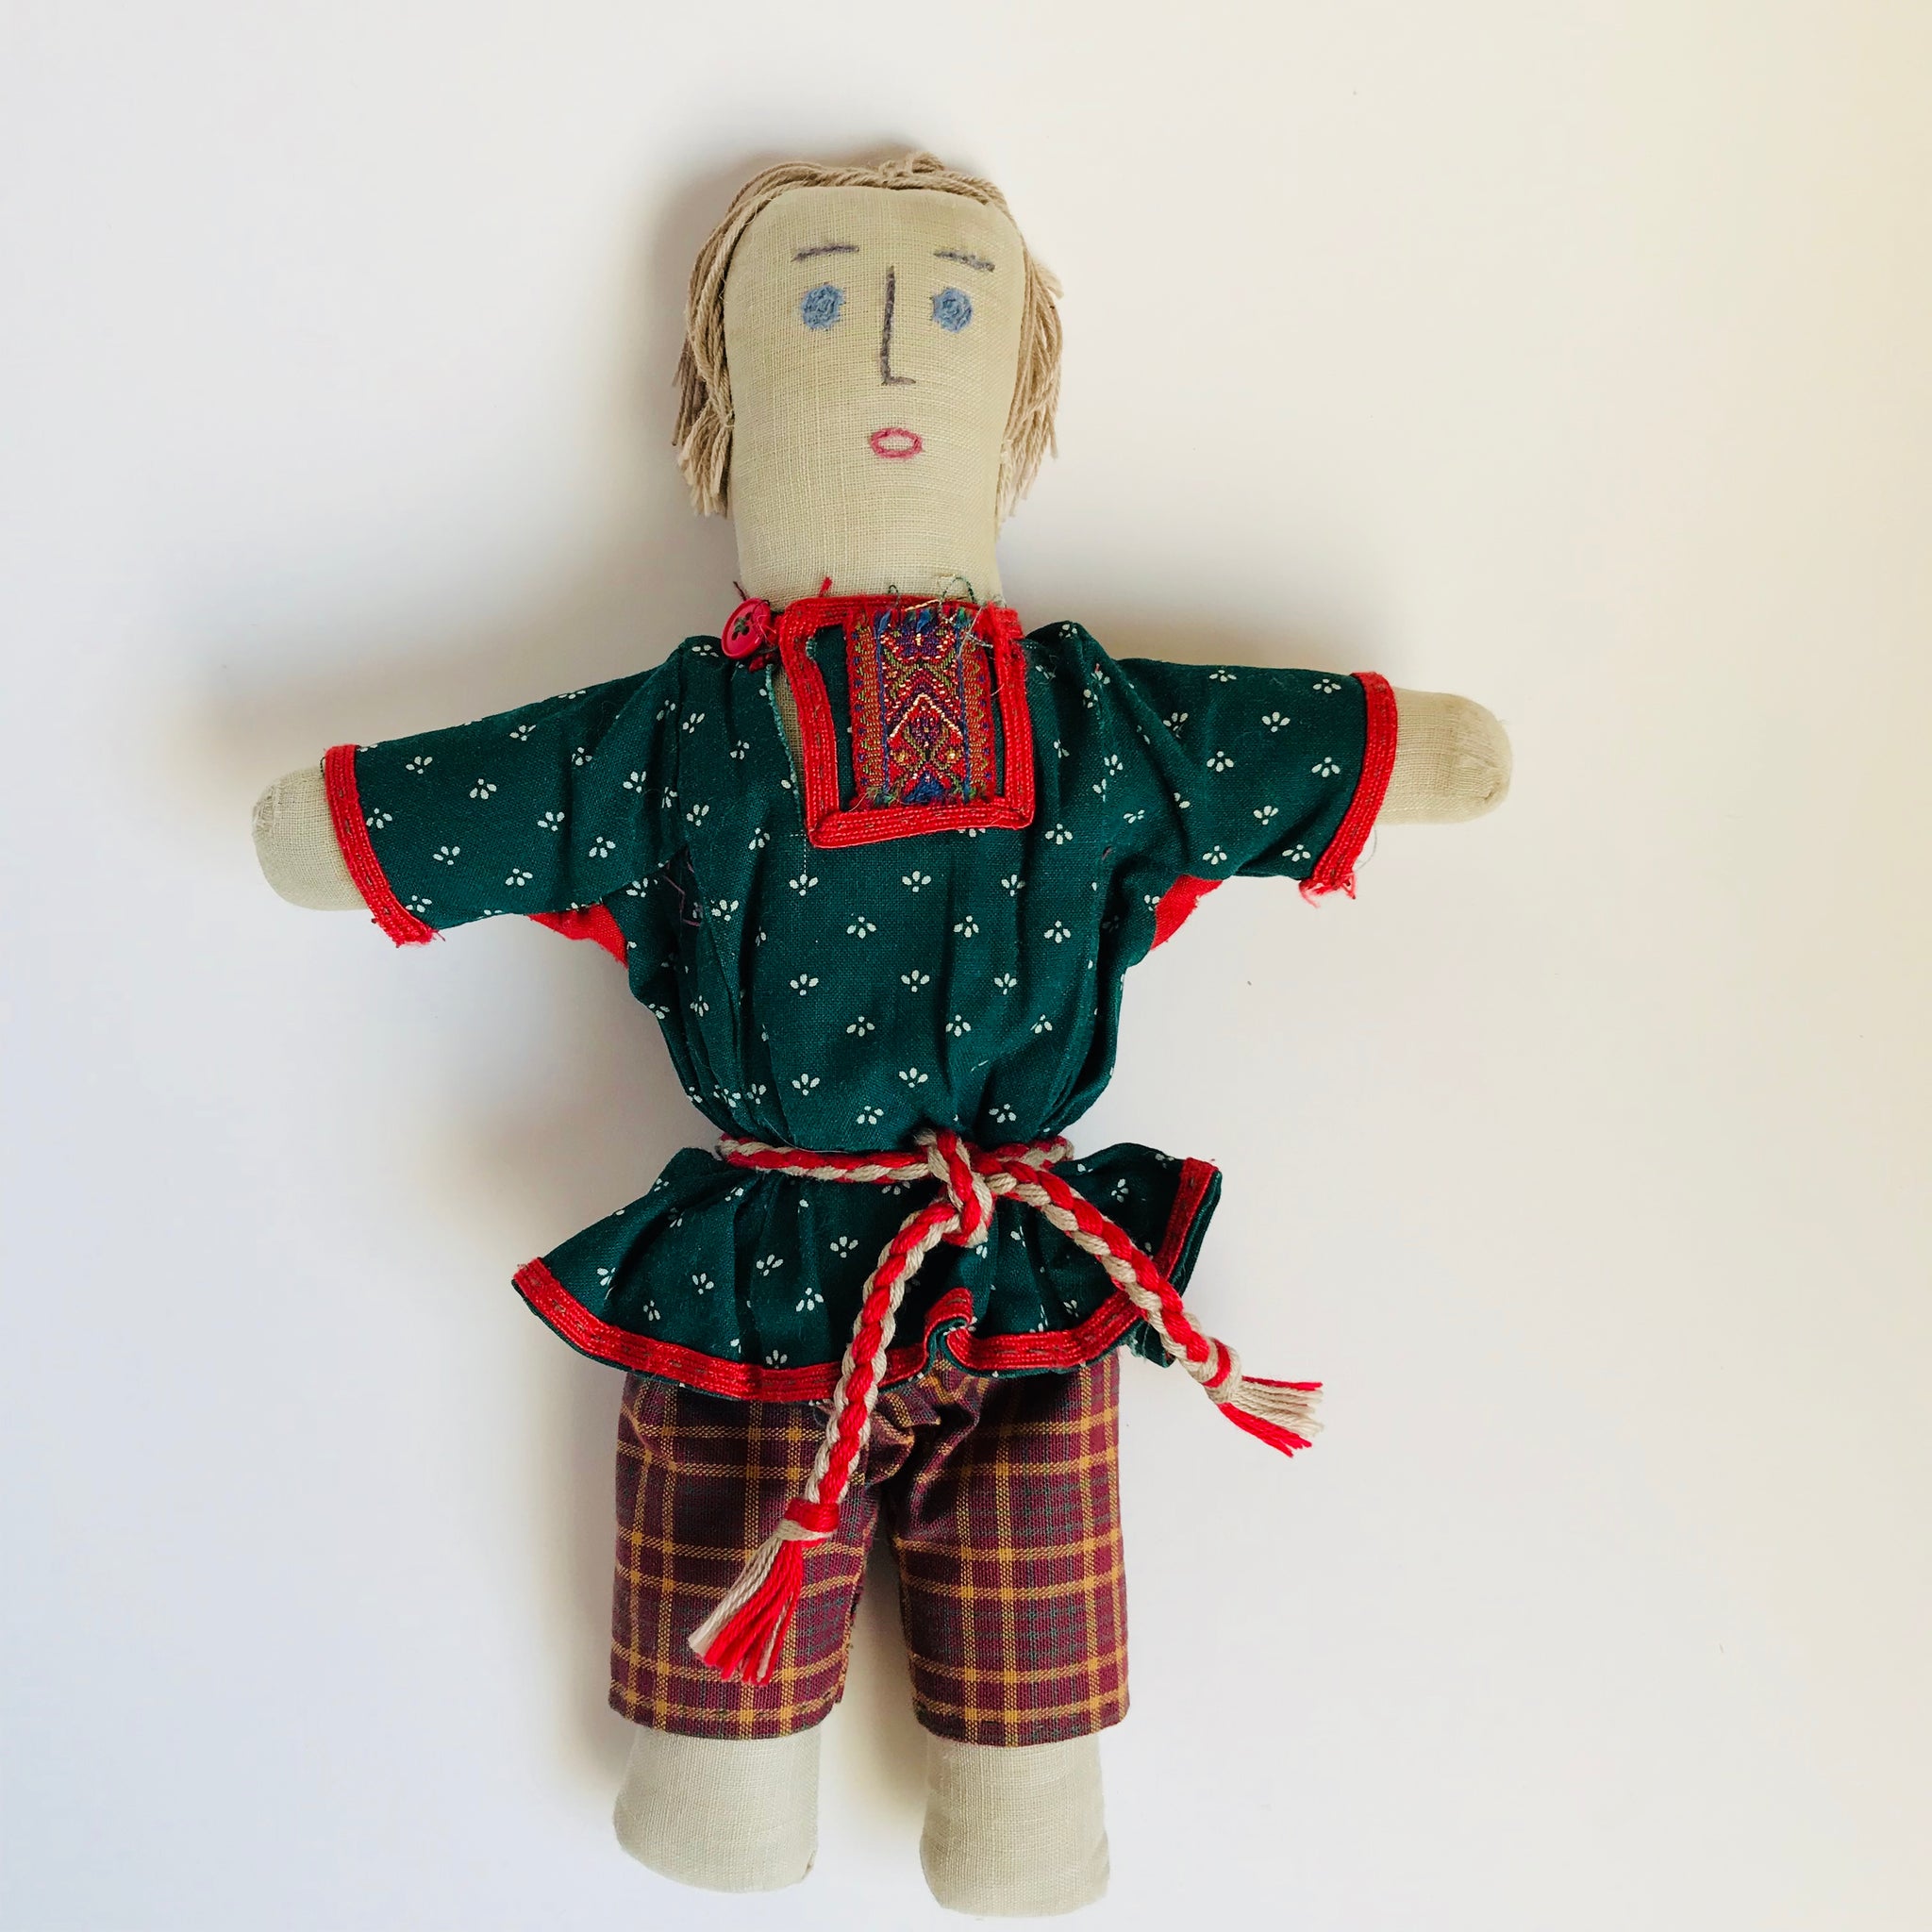 Baba (grandma) fabrics doll making kit. – Kedry gift store